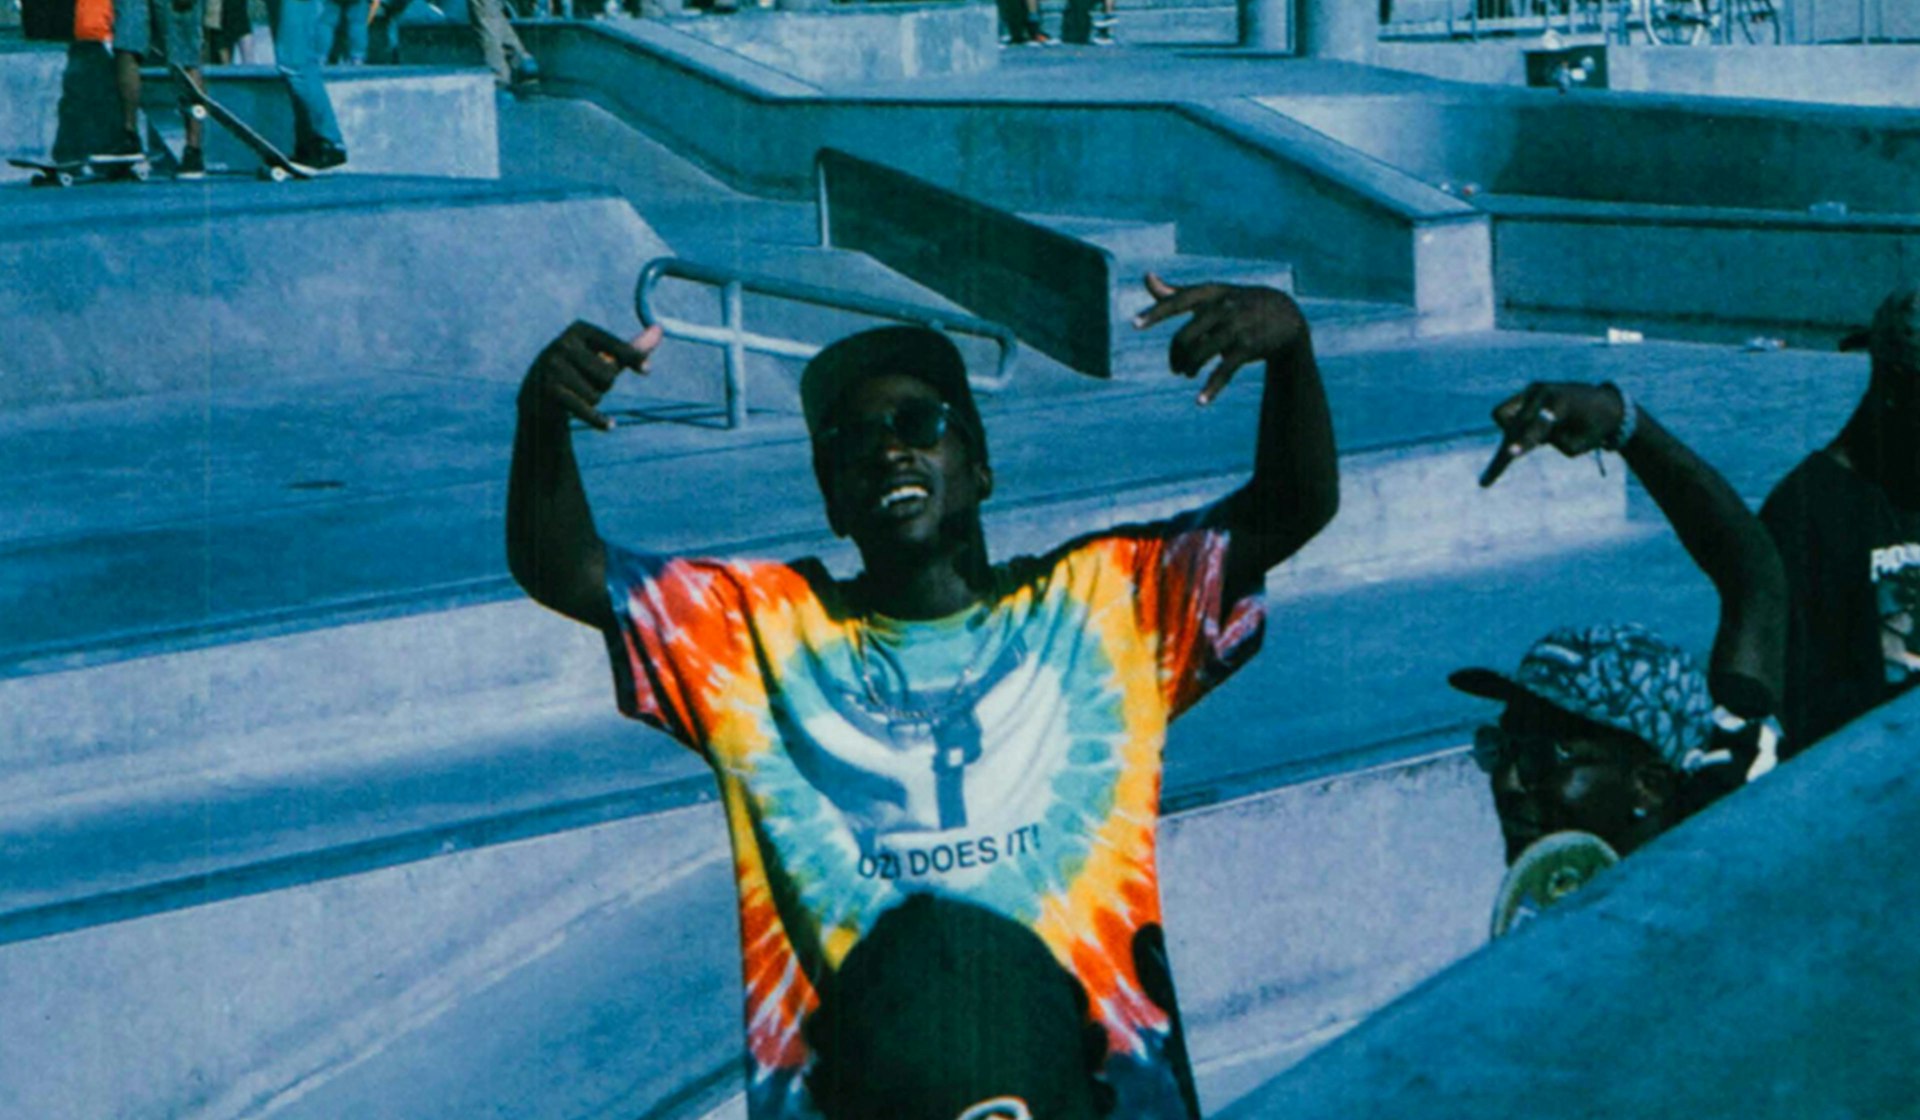 '90s nostalgia at Cali beach skateparks captured in analogue